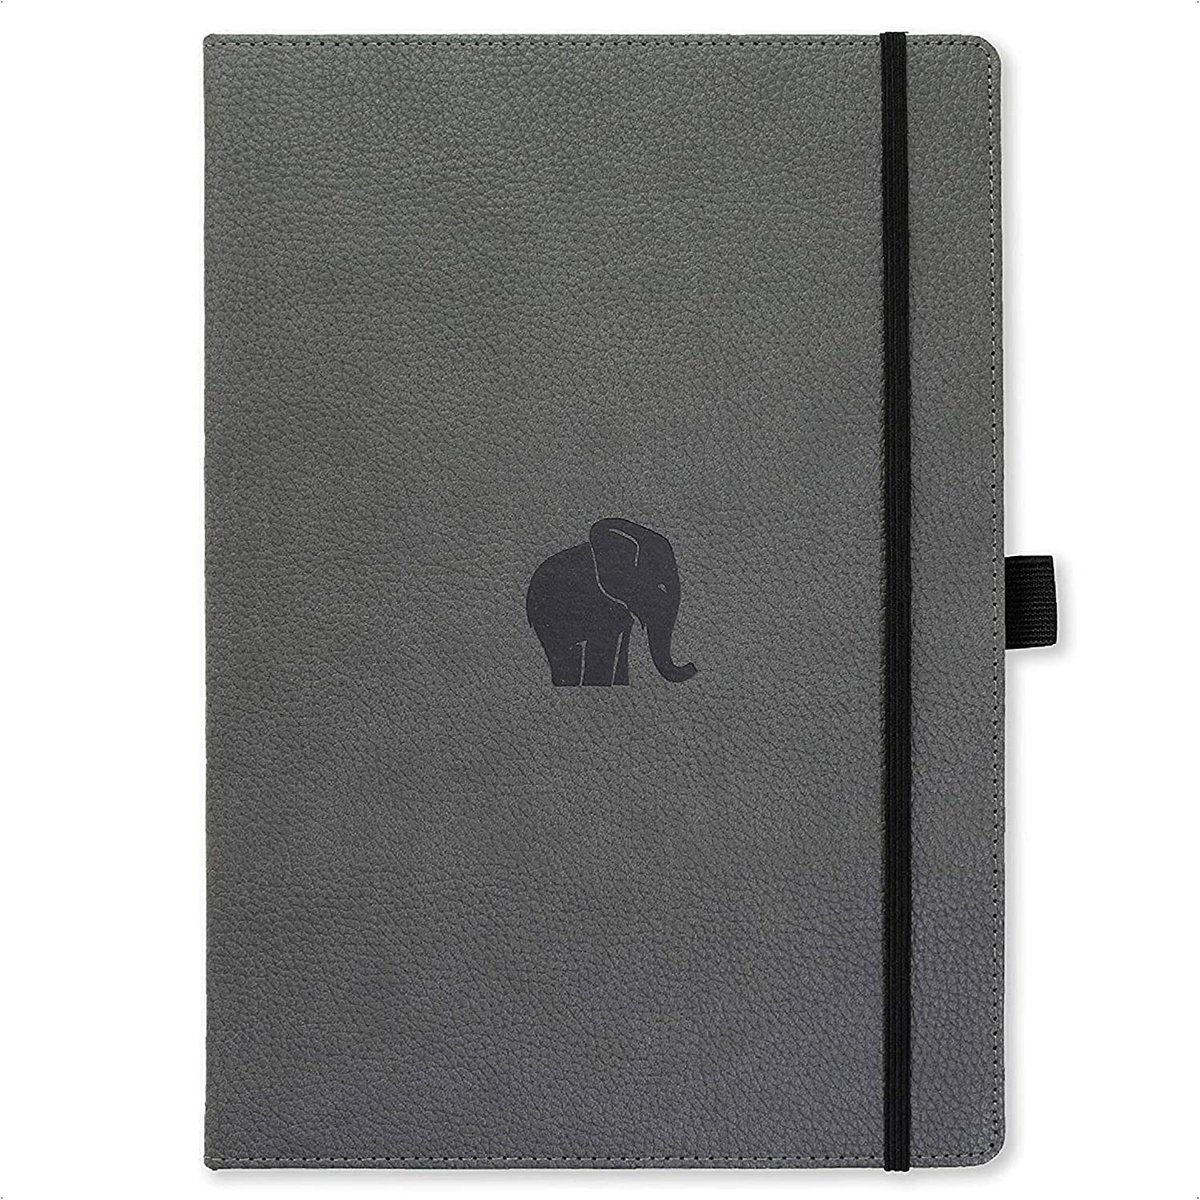 Dingbats A4+ Wildlife Grey Elephant Notebook - Graph